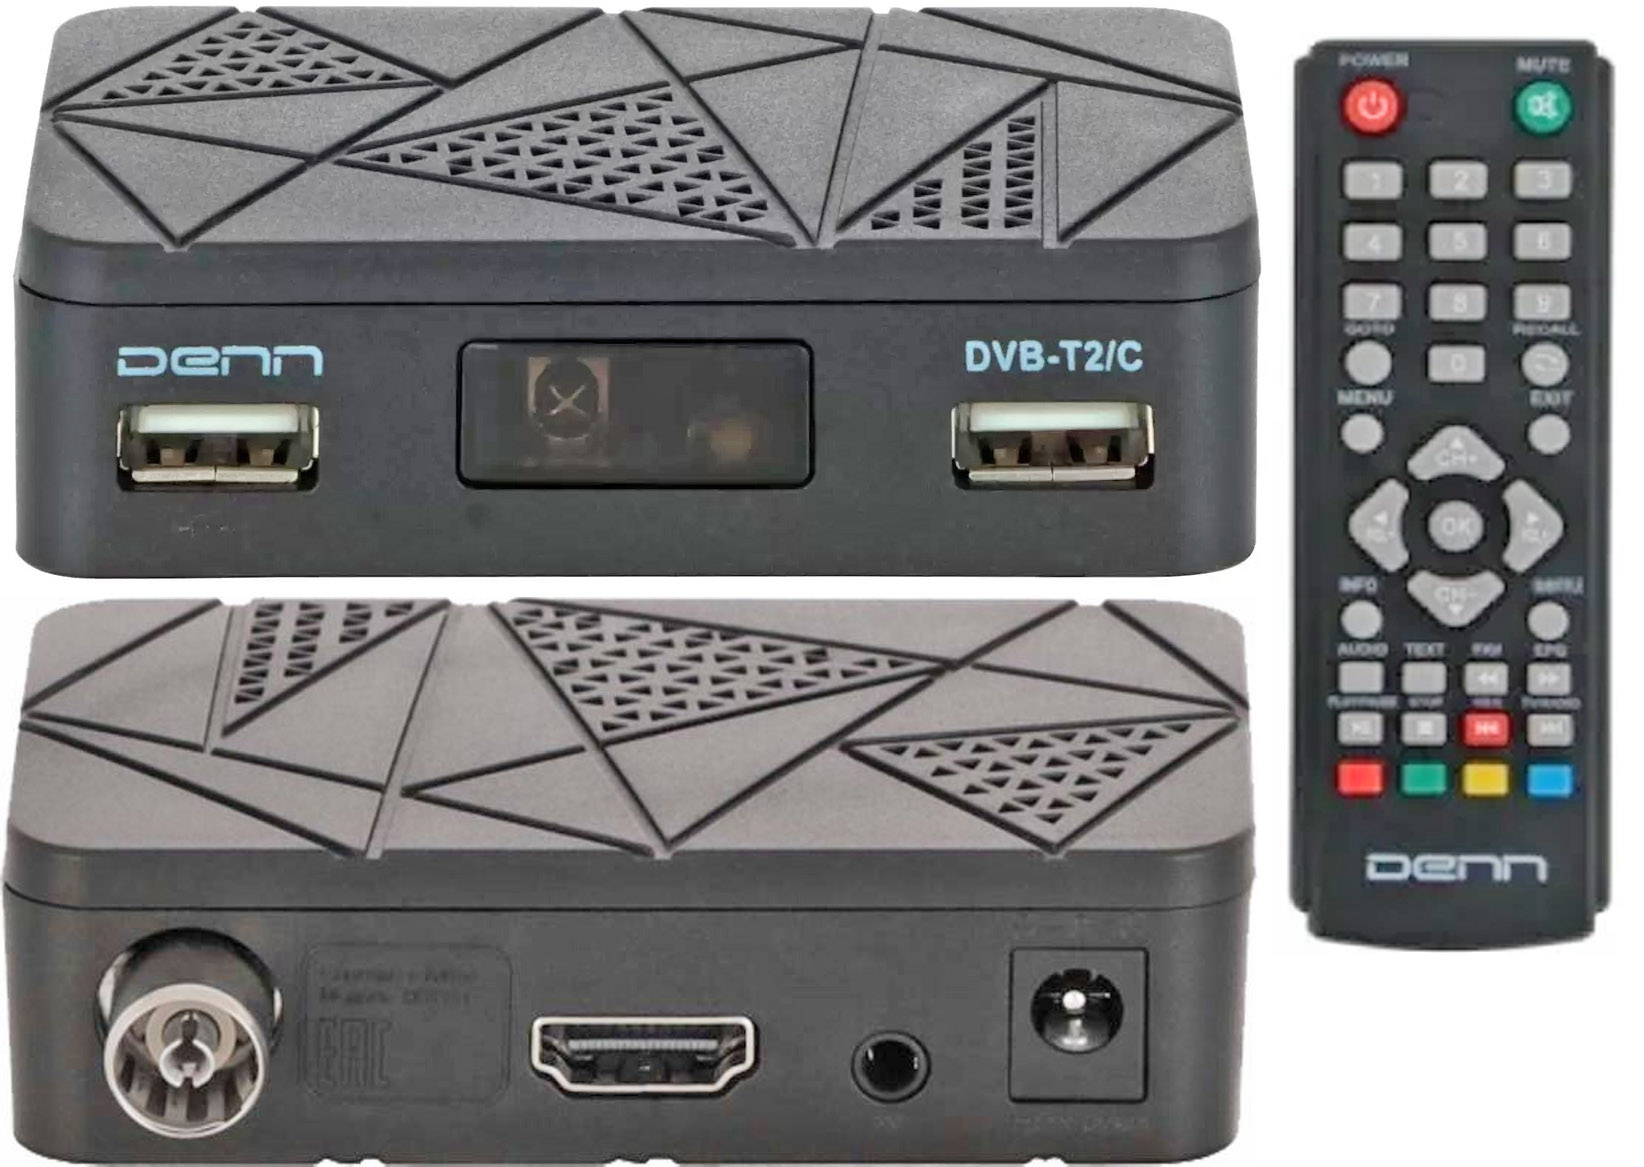 Цифровой ТВ-тюнер DENN DDT141, DVB-T2/С, USB, после ремонта, гарантия 6 месяцев.